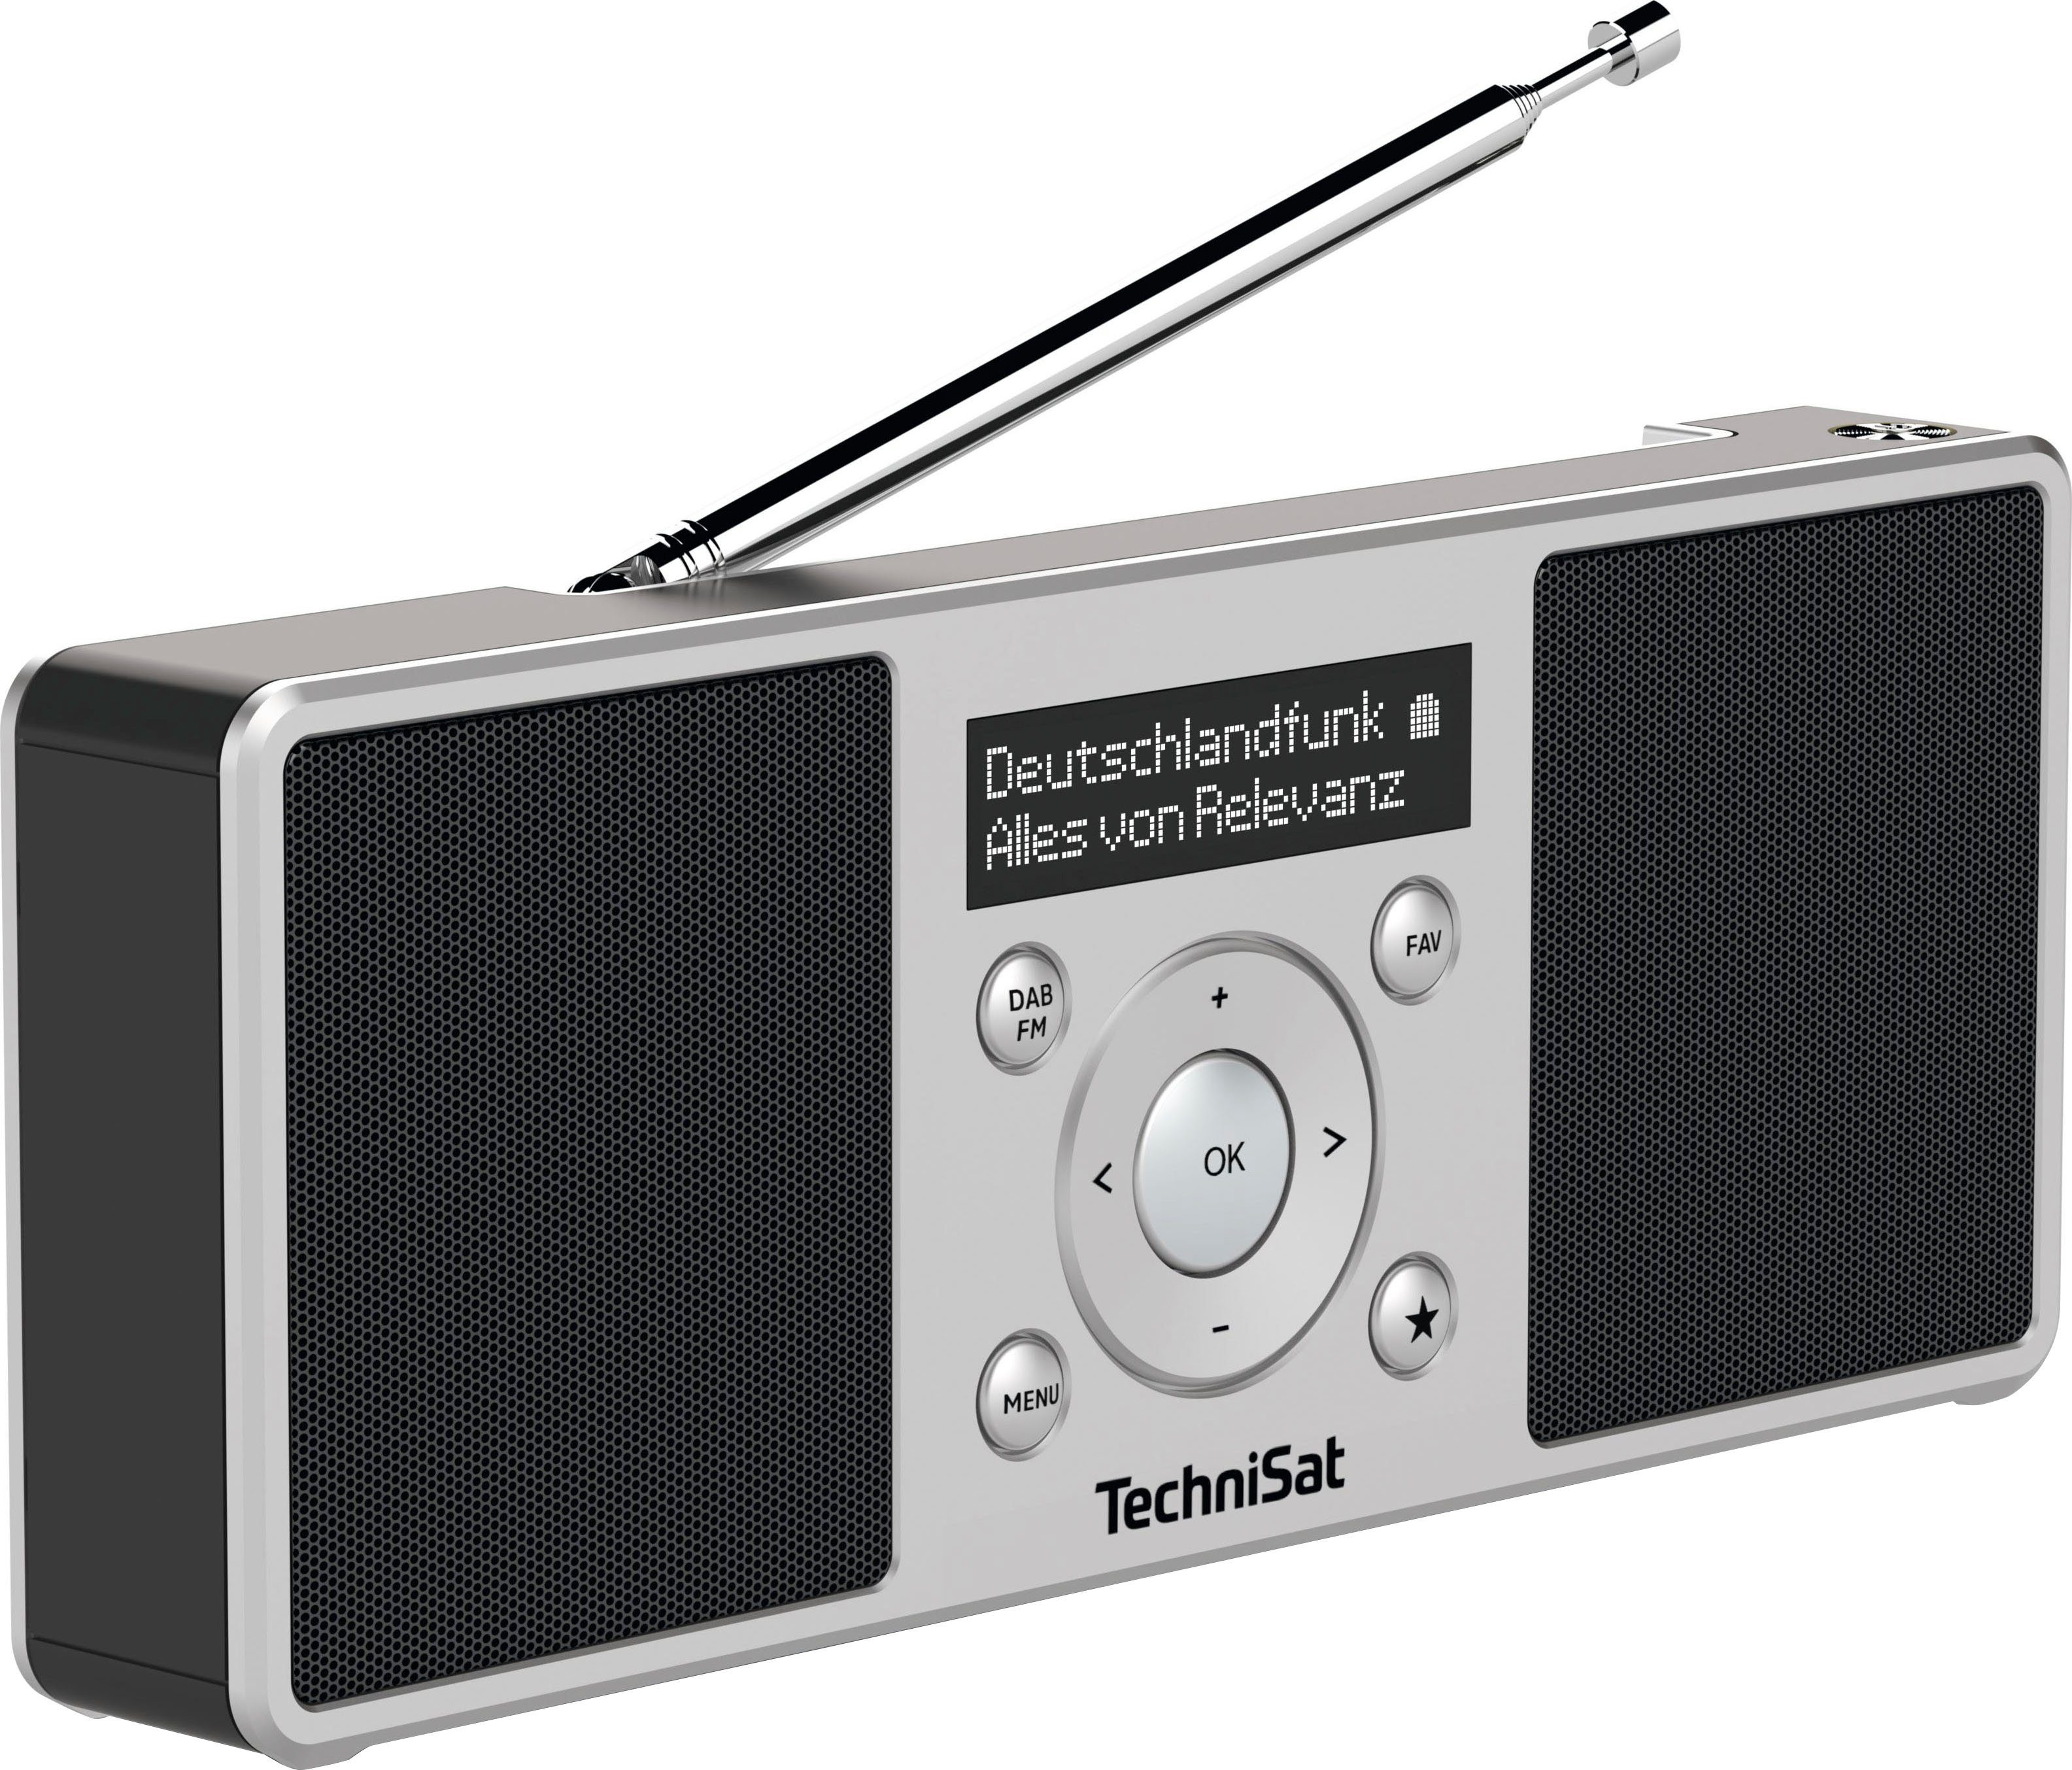 mit 2 W, S Made (Digitalradio DIGITRADIO Digitalradio (DAB), UKW 1 Germany), RDS, 1x (DAB) Kopfhöreranschluss USB, TechniSat in